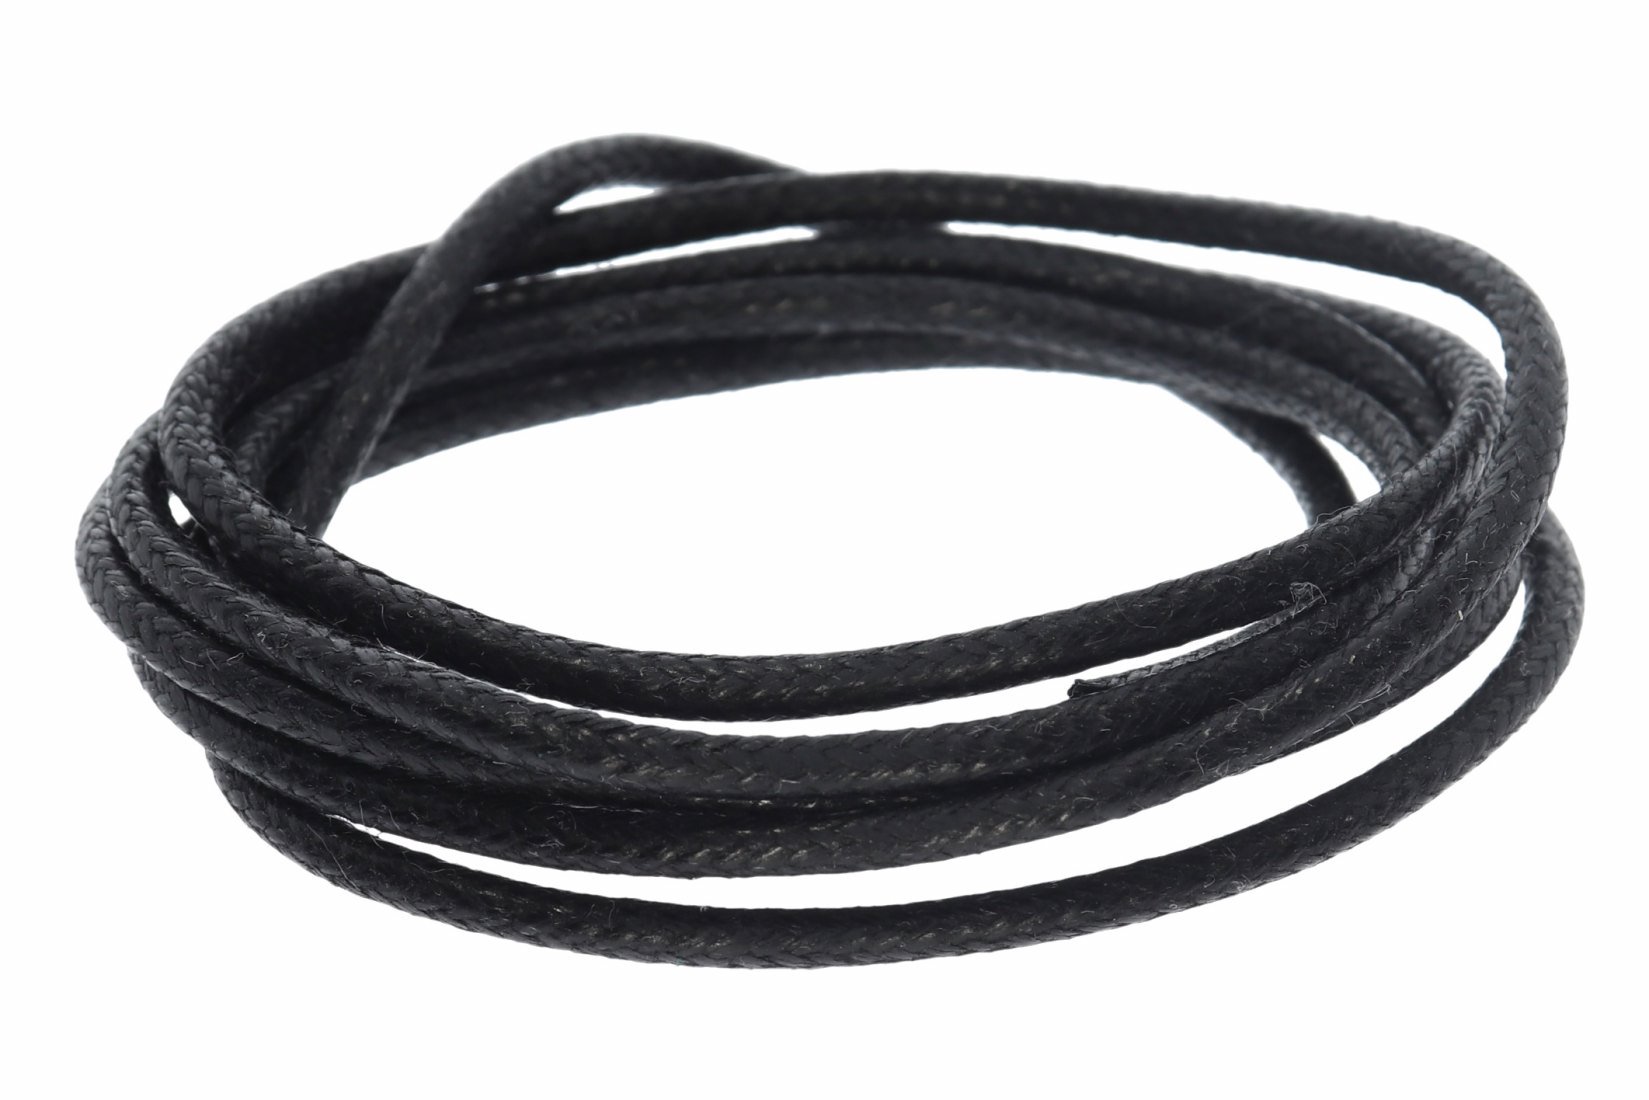 Roma Baumwollband Halskette 2mm A194 - Farbauswahl - Karabiner Oxyd glänzend 38-100cm